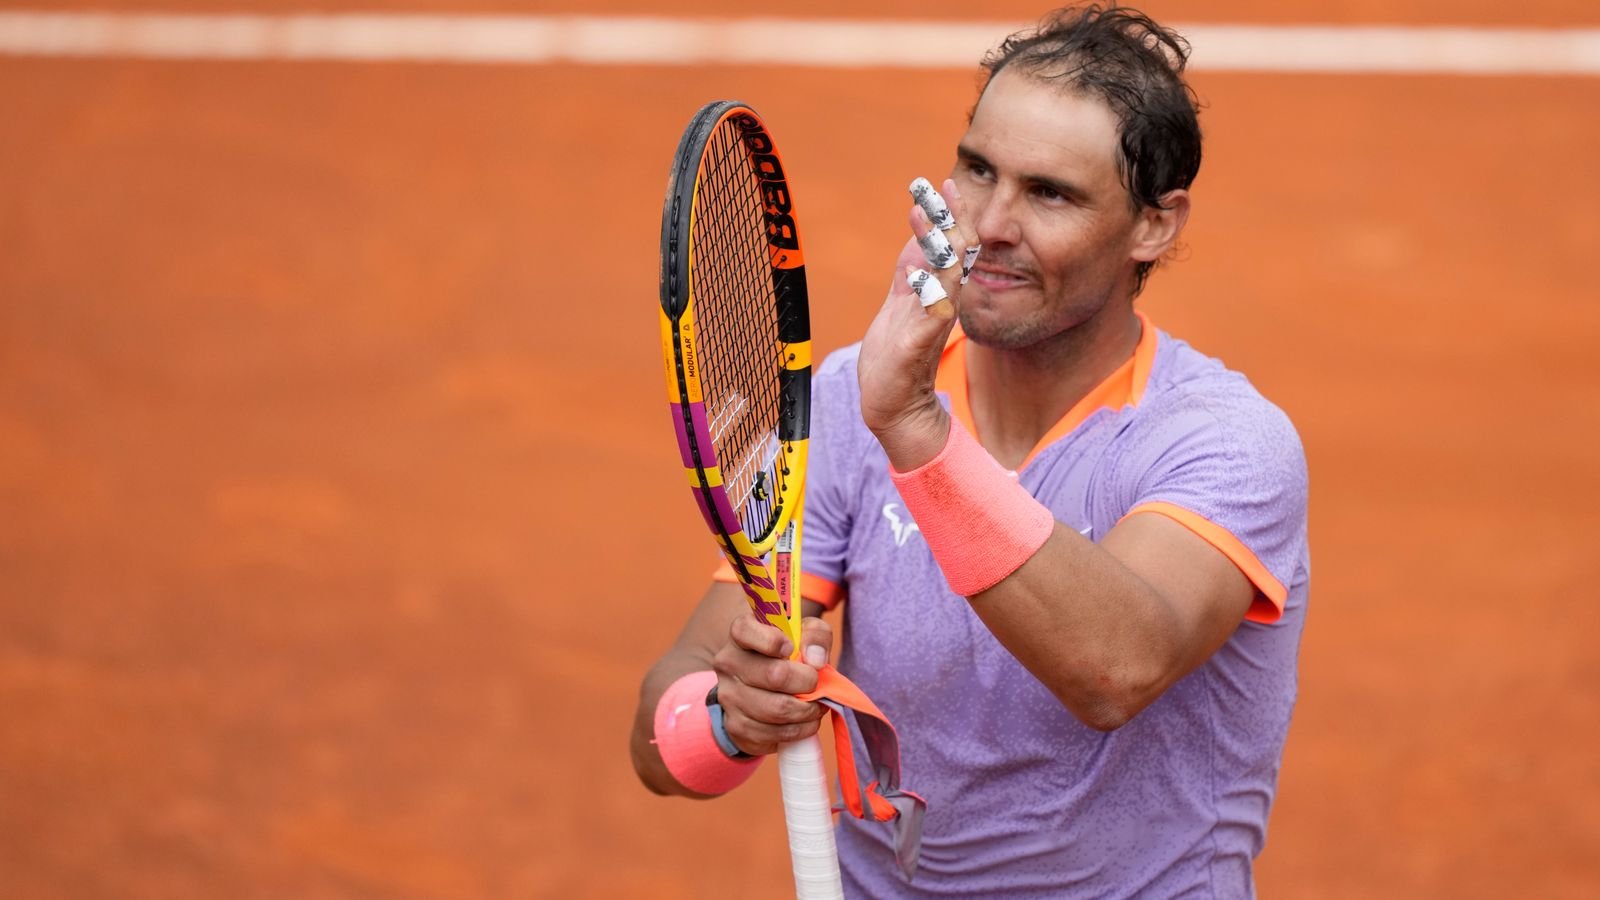 Rafael Nadal: Record 10-time champion beaten in straight sets by Hubert Hurkacz at Italian Open | Tennis News